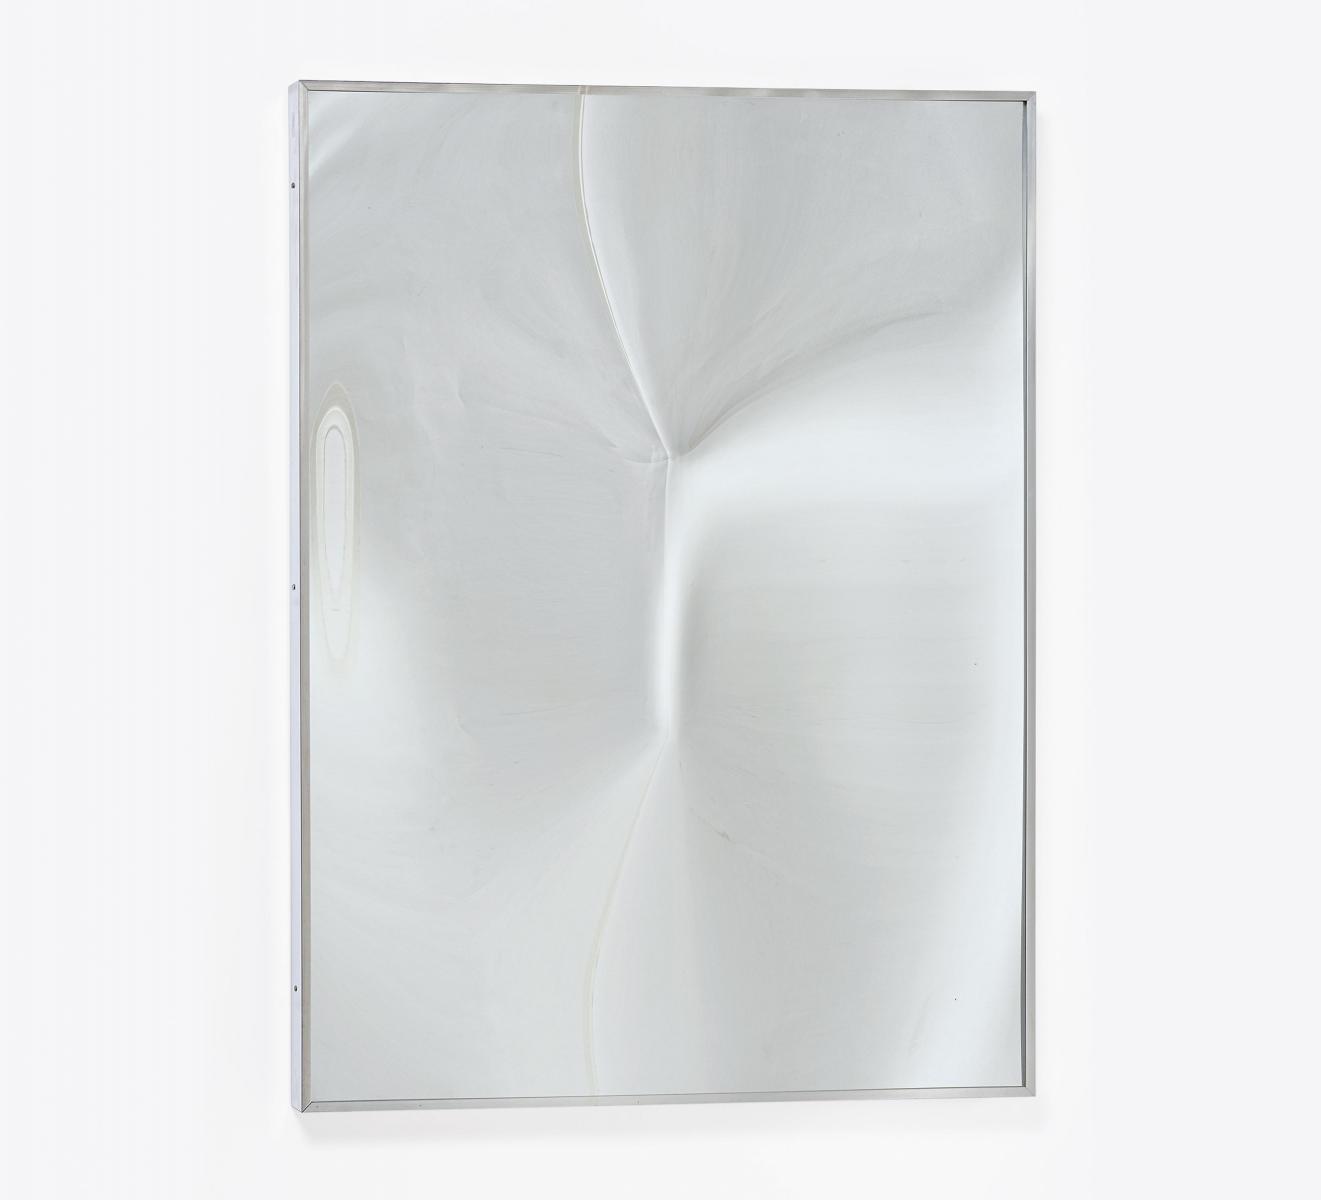 Victor Bonato - Glas-Spiegel-Verformung 5701970, 55941-2, Van Ham Kunstauktionen